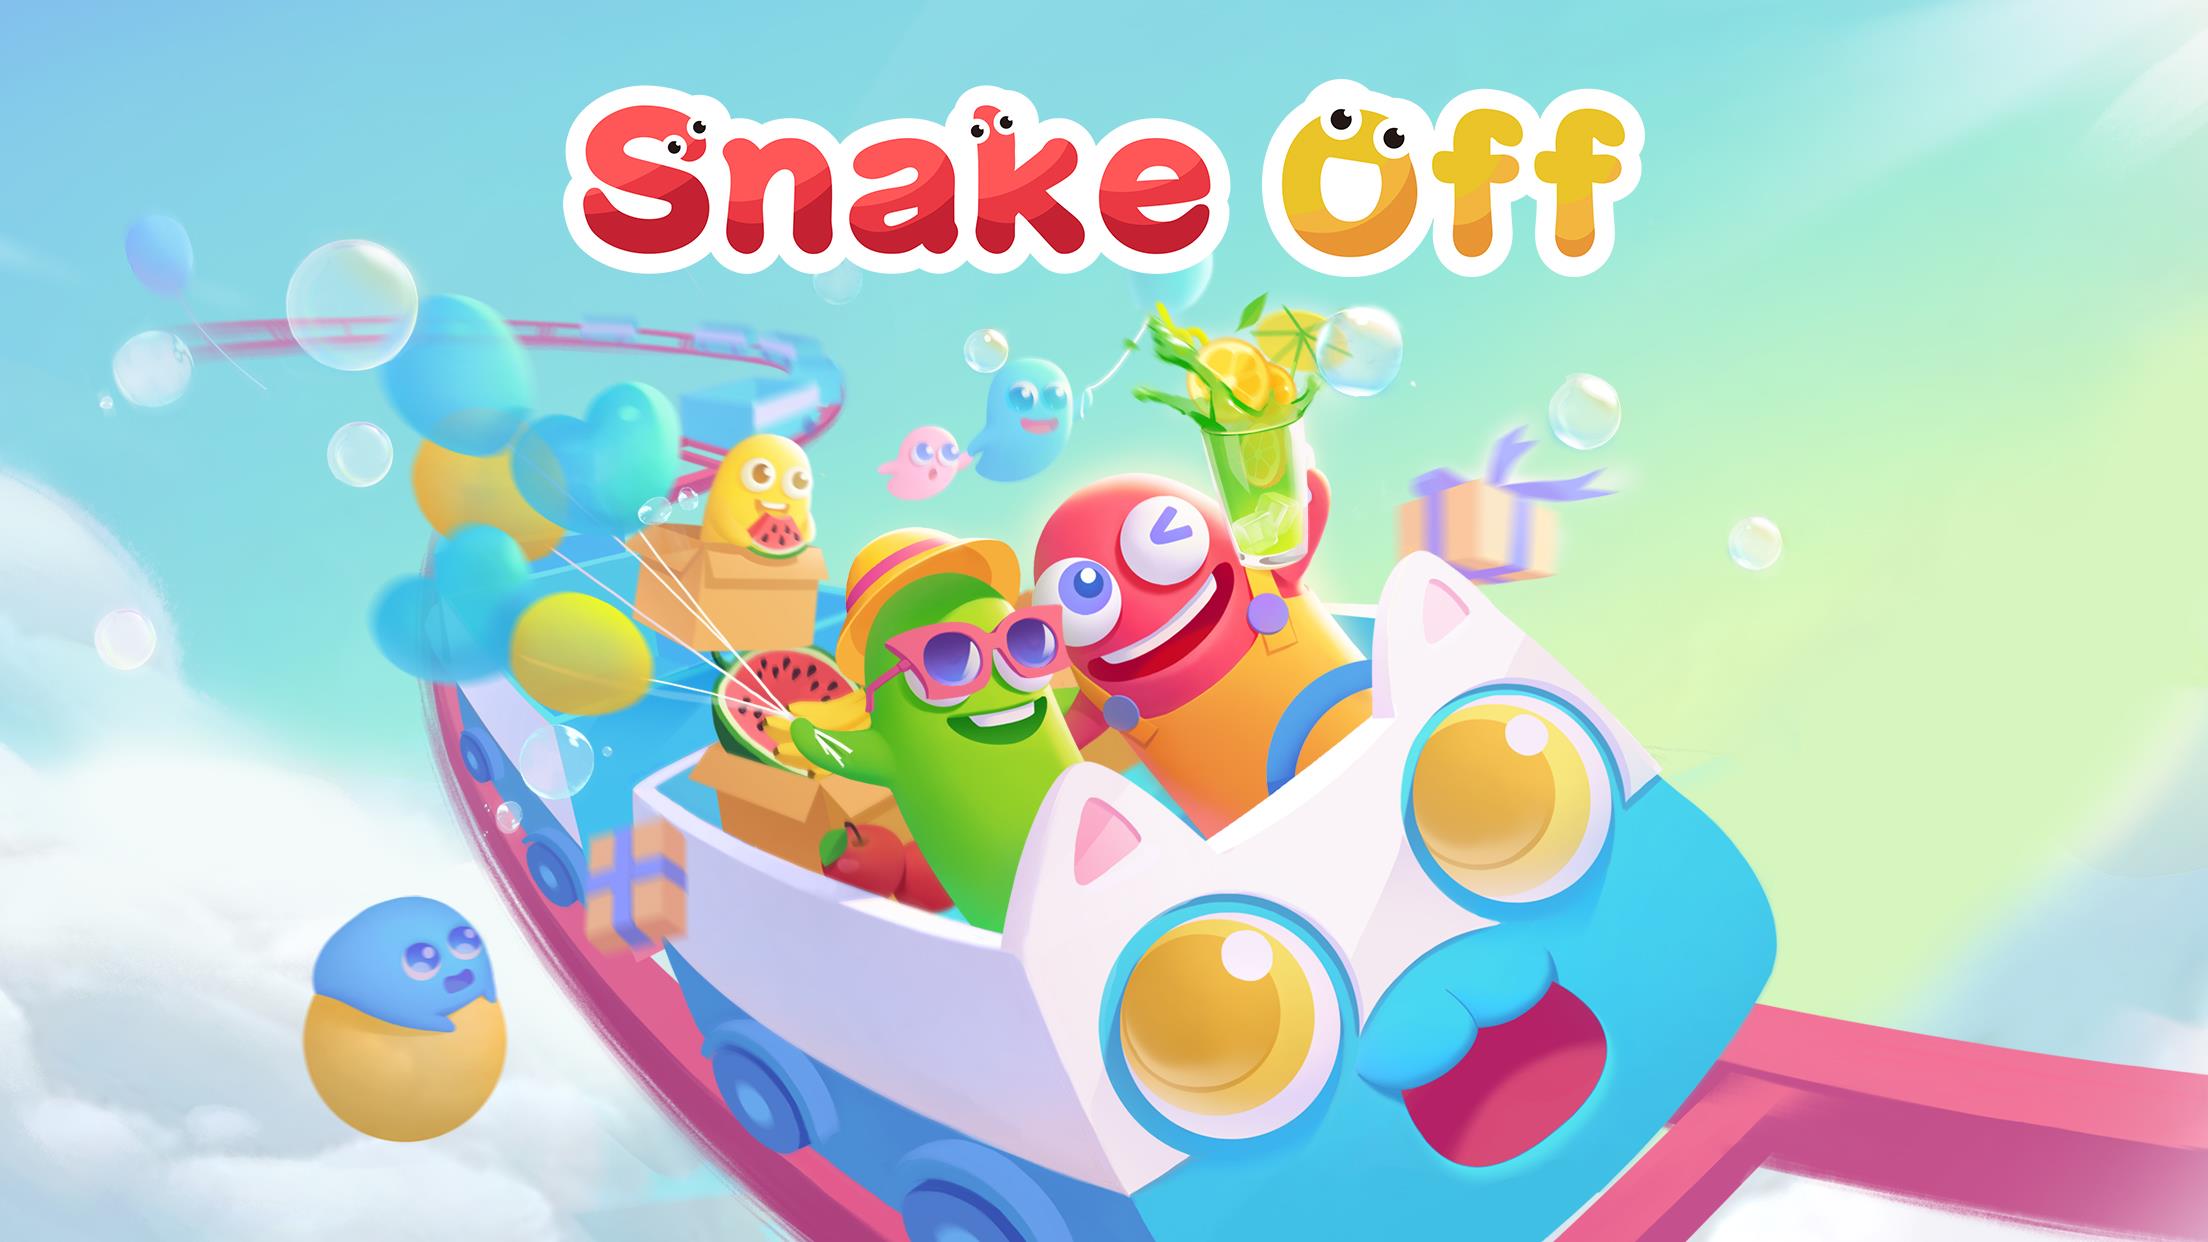 Snake Off - More Play,More Fun Screenshot 6